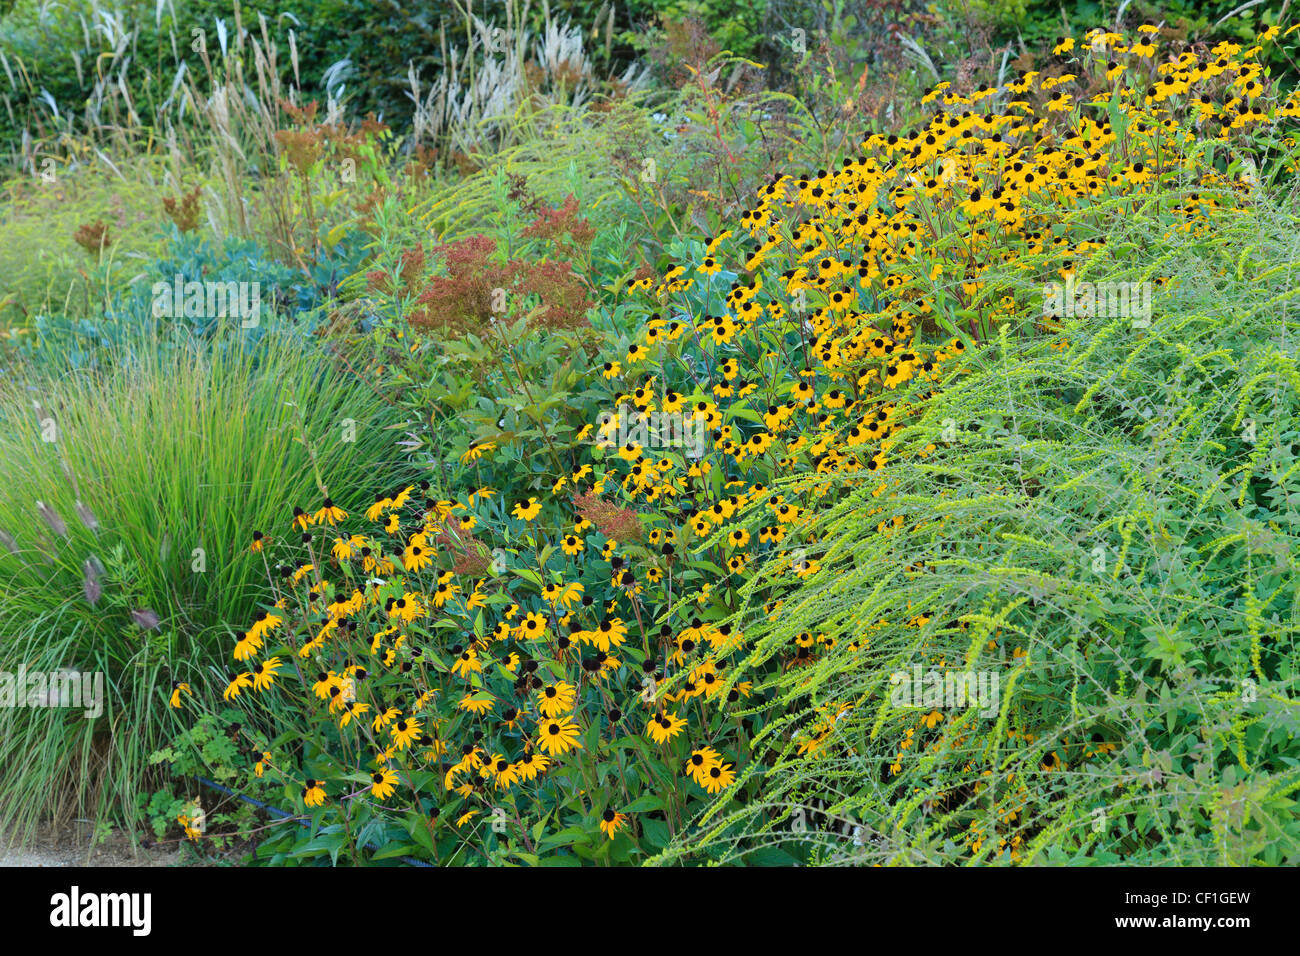 In fall, perennials, Rudbeckia, grasses ...(France, Chaumont-sur-Loire, Festival International des Jardins) Stock Photo